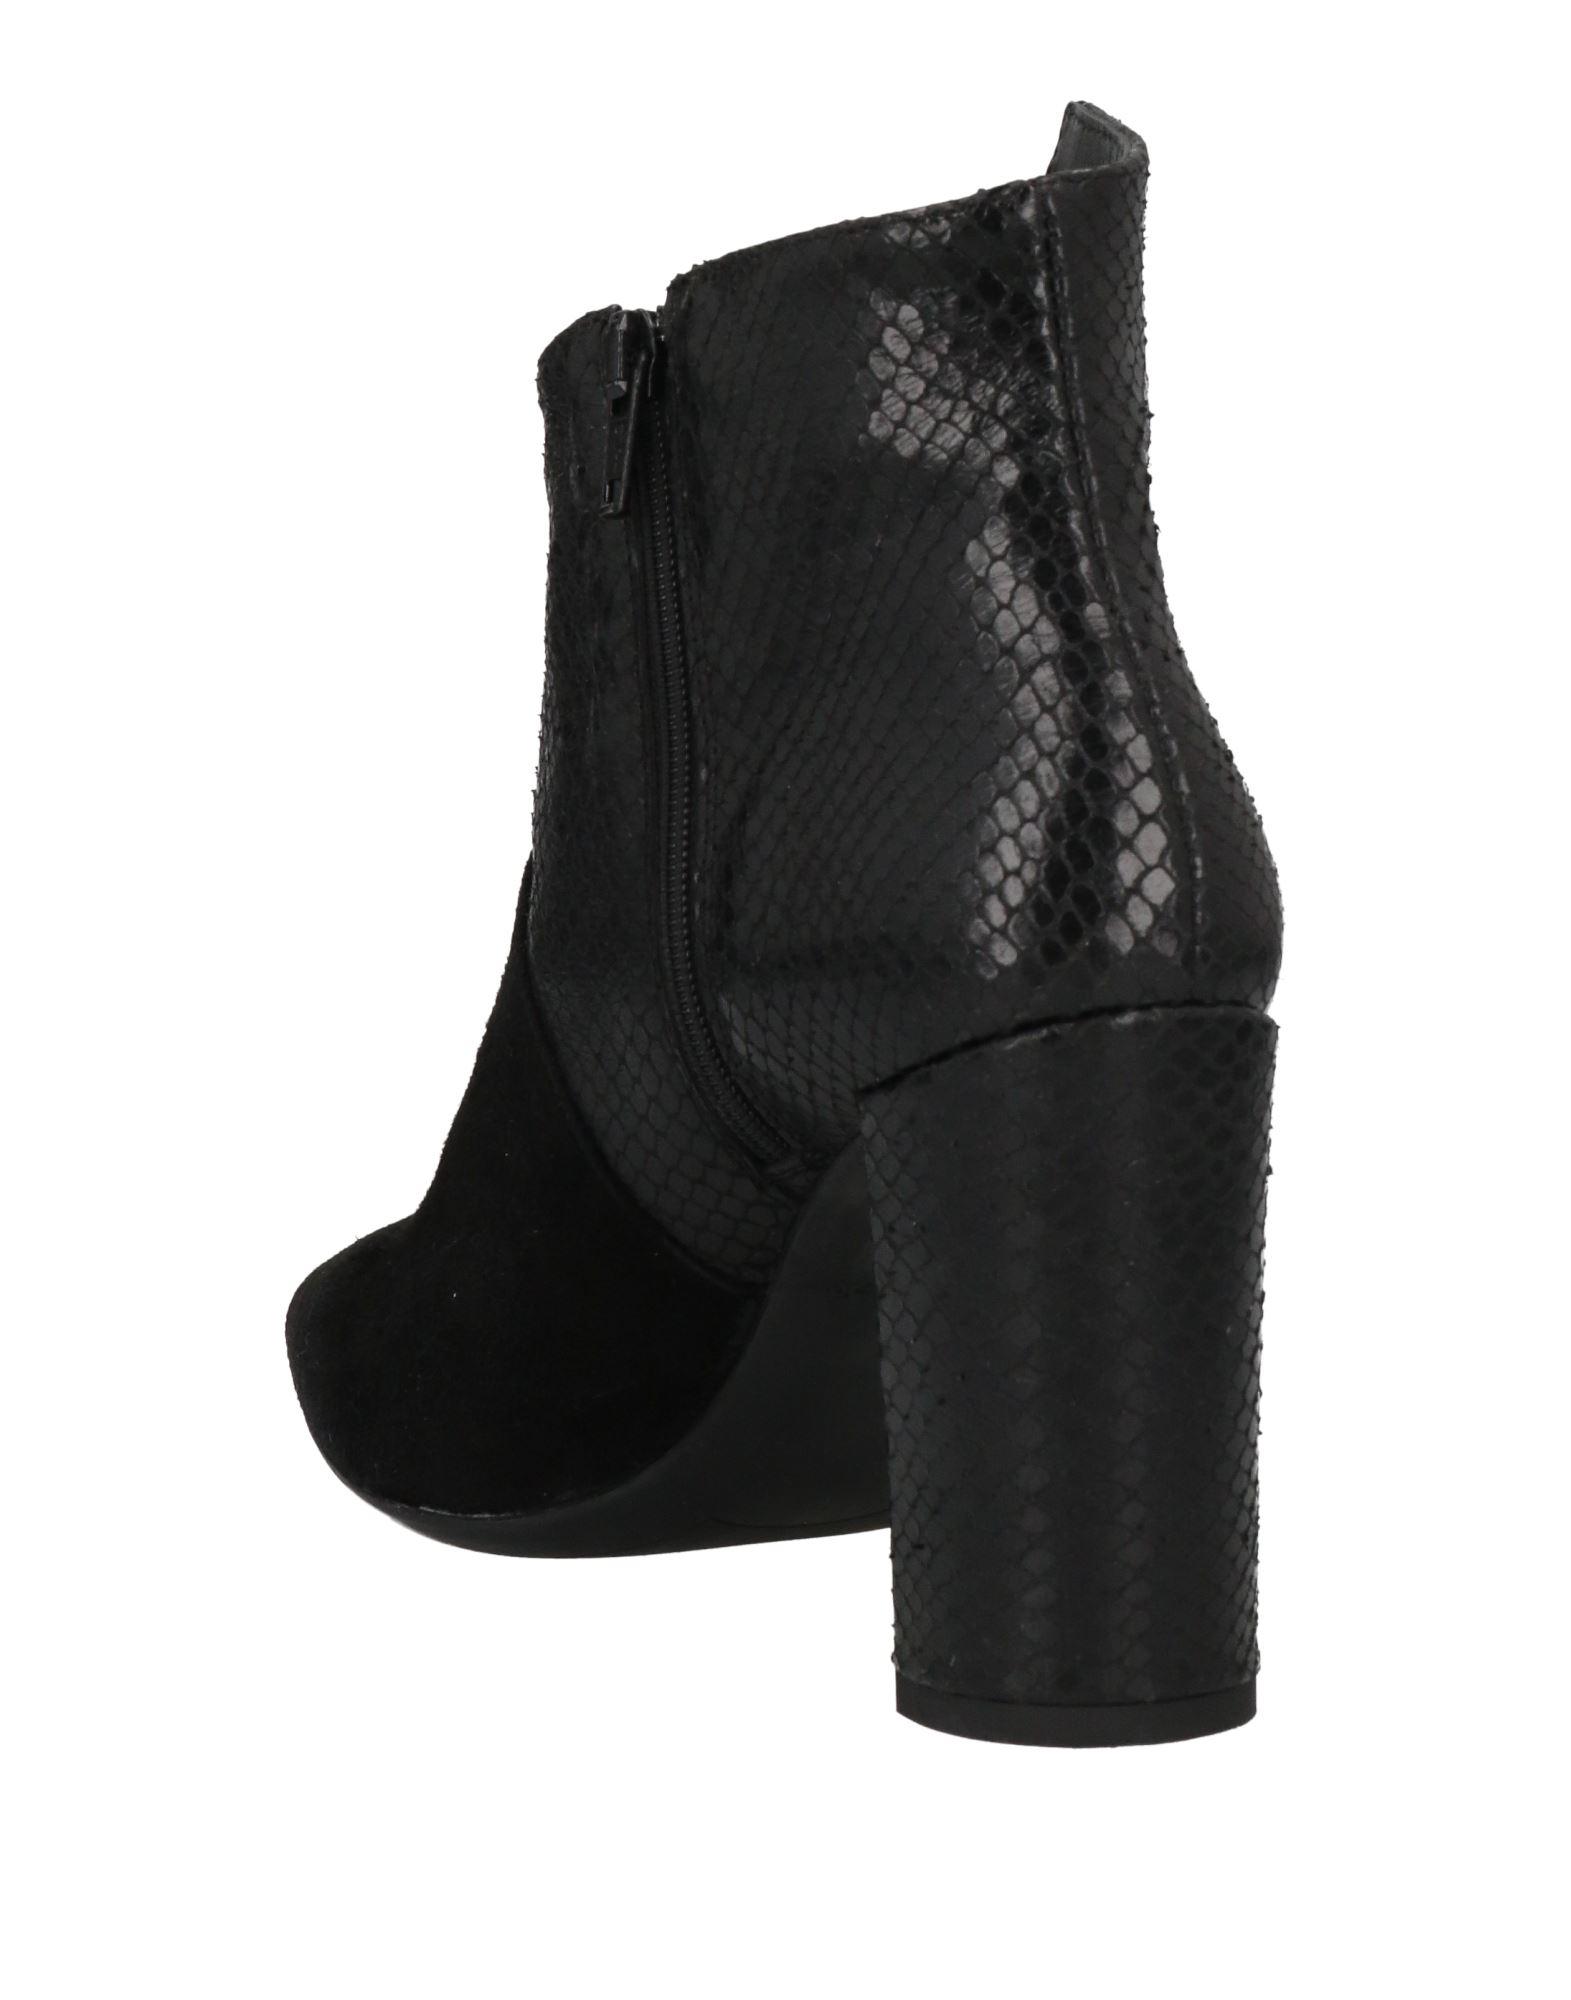 Emanuela Passeri Ankle Boots in Black | Lyst